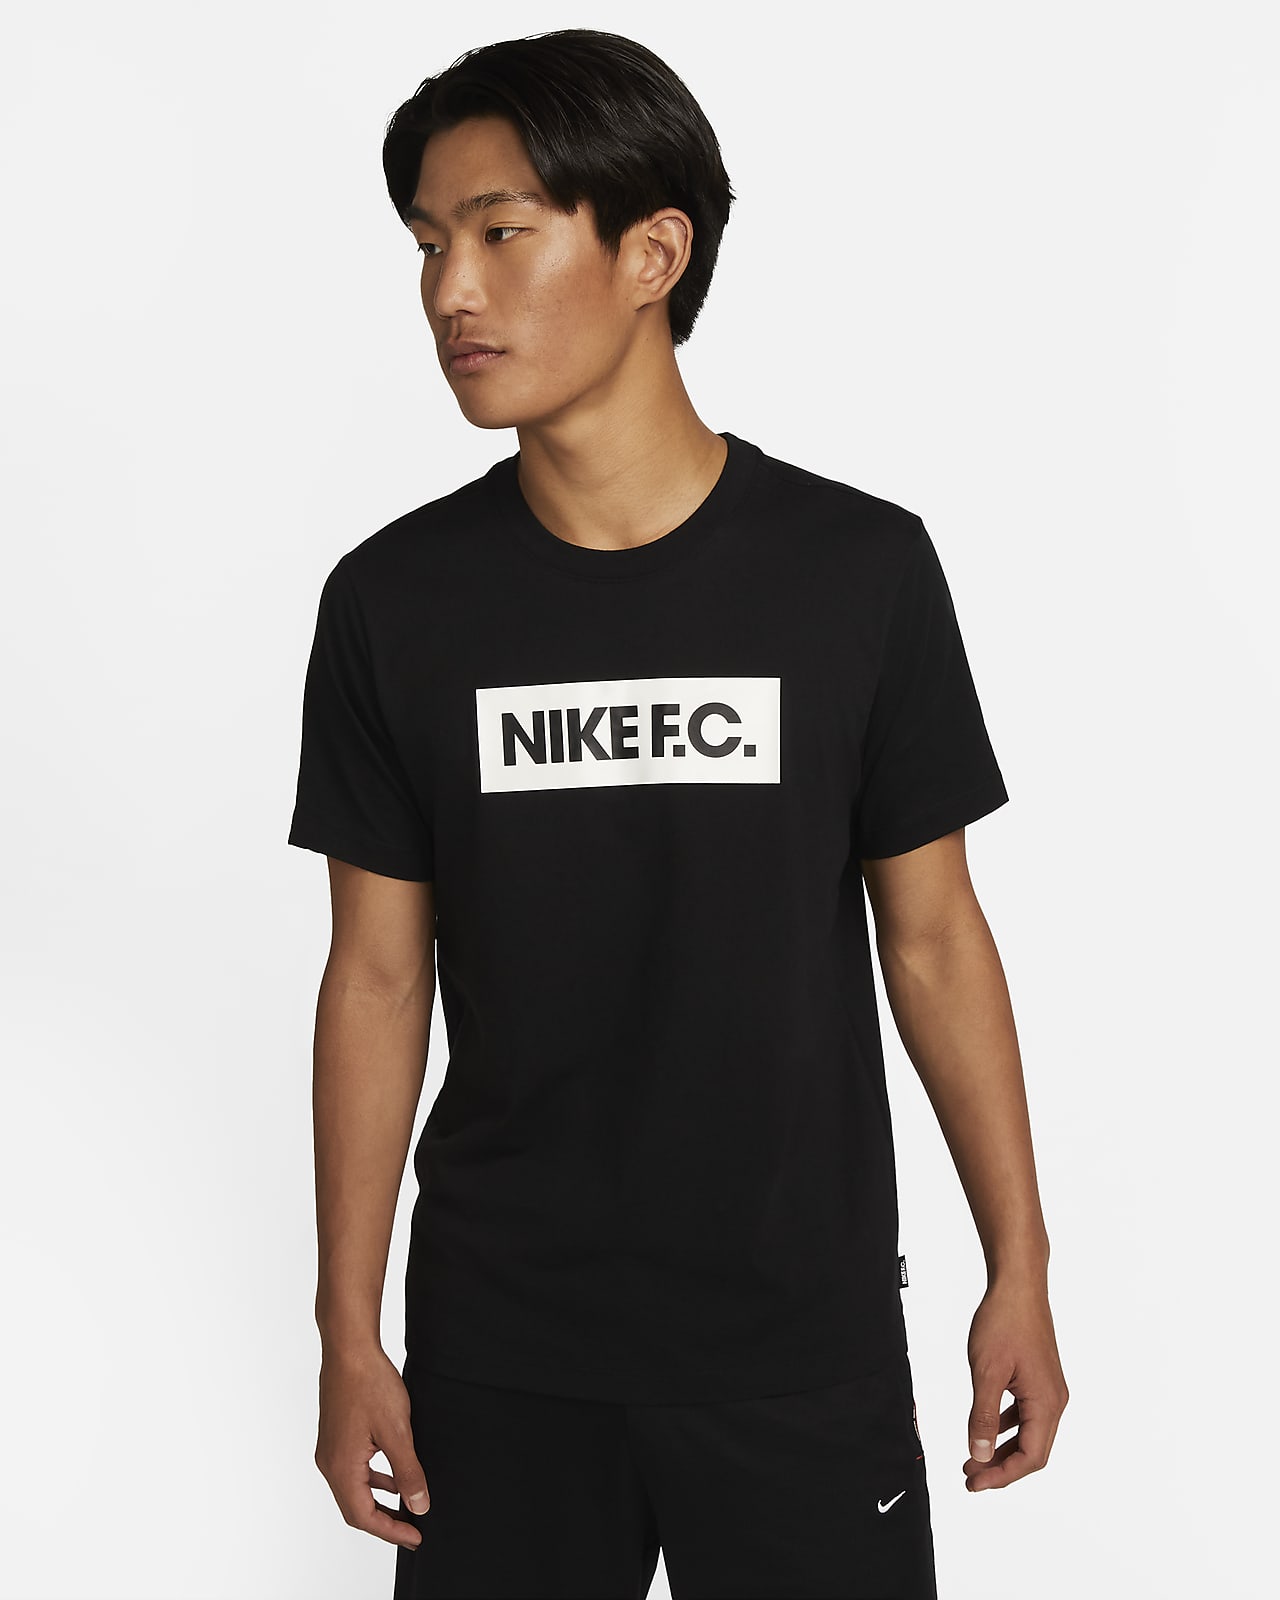 Oscuro Resolver Prisión Nike F.C. Men's Football T-Shirt. Nike MY